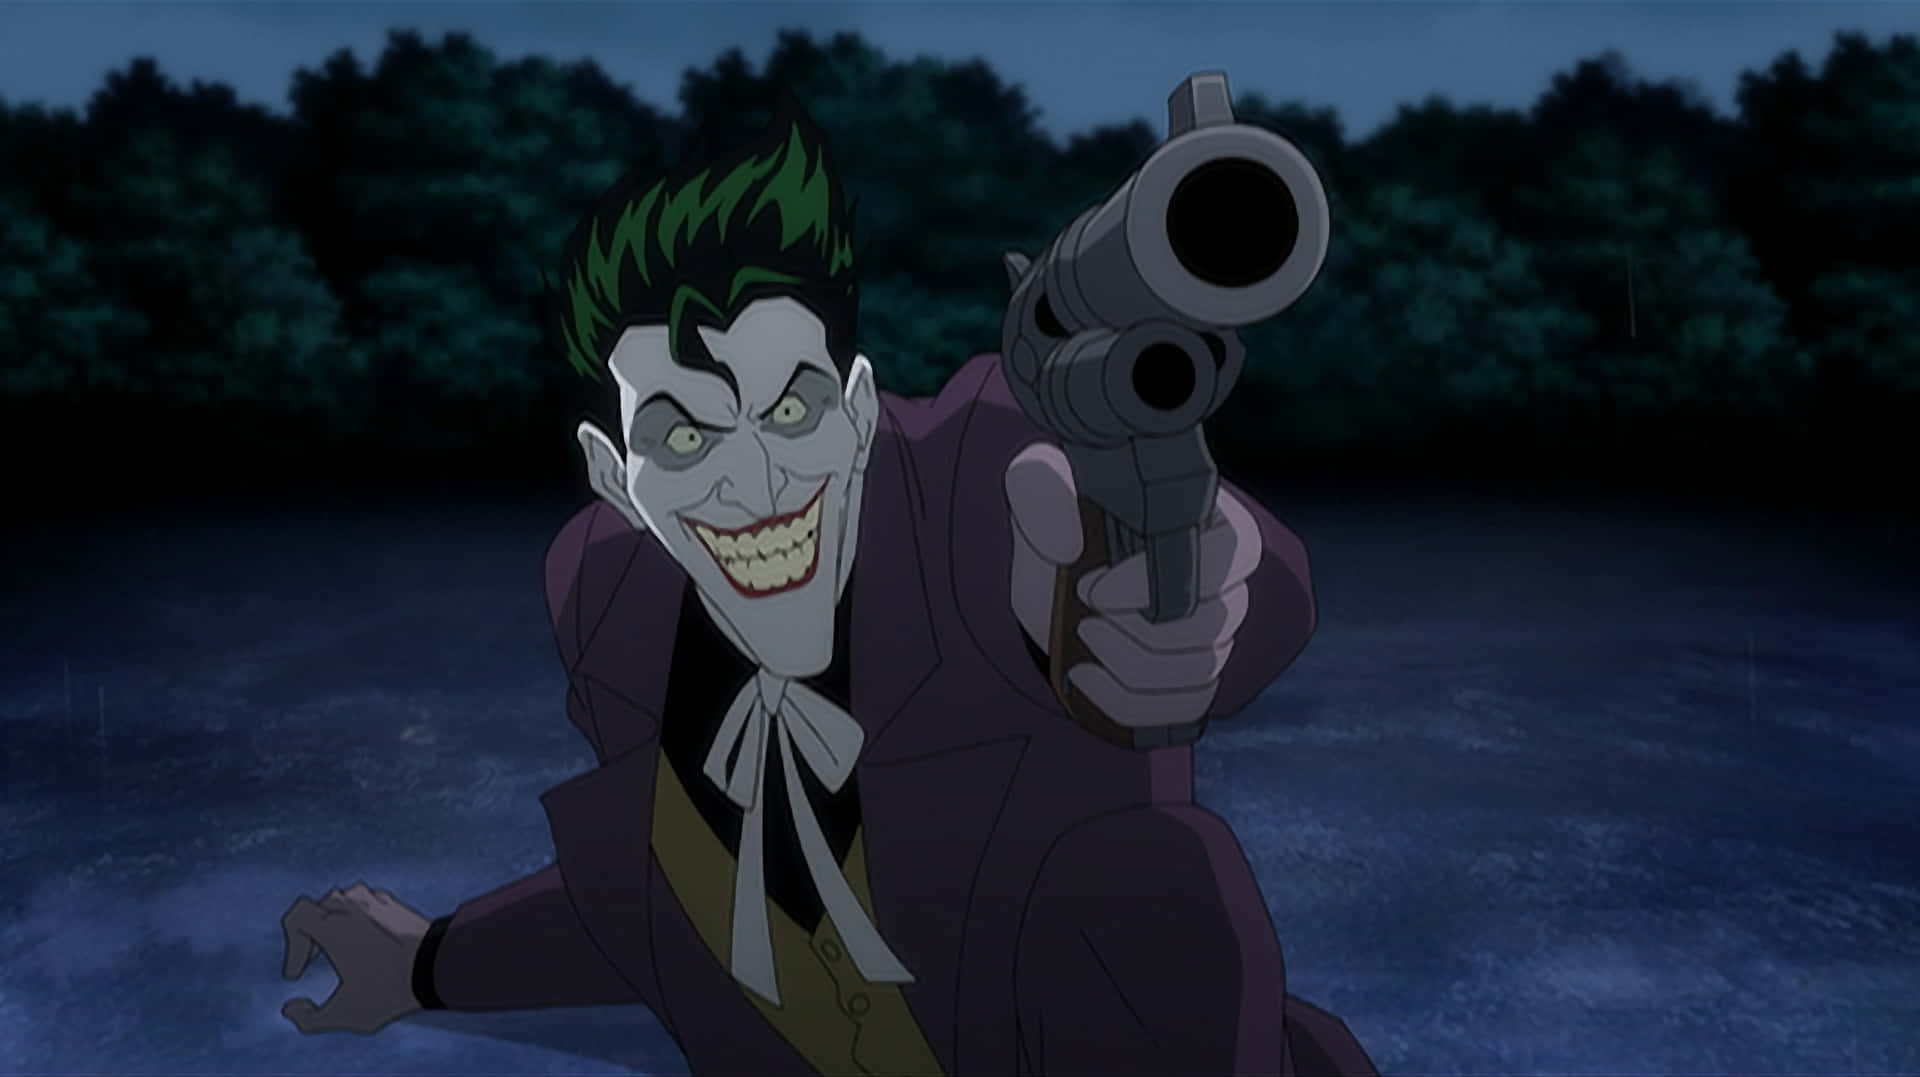 Batman and Joker facing off in The Killing Joke Wallpaper